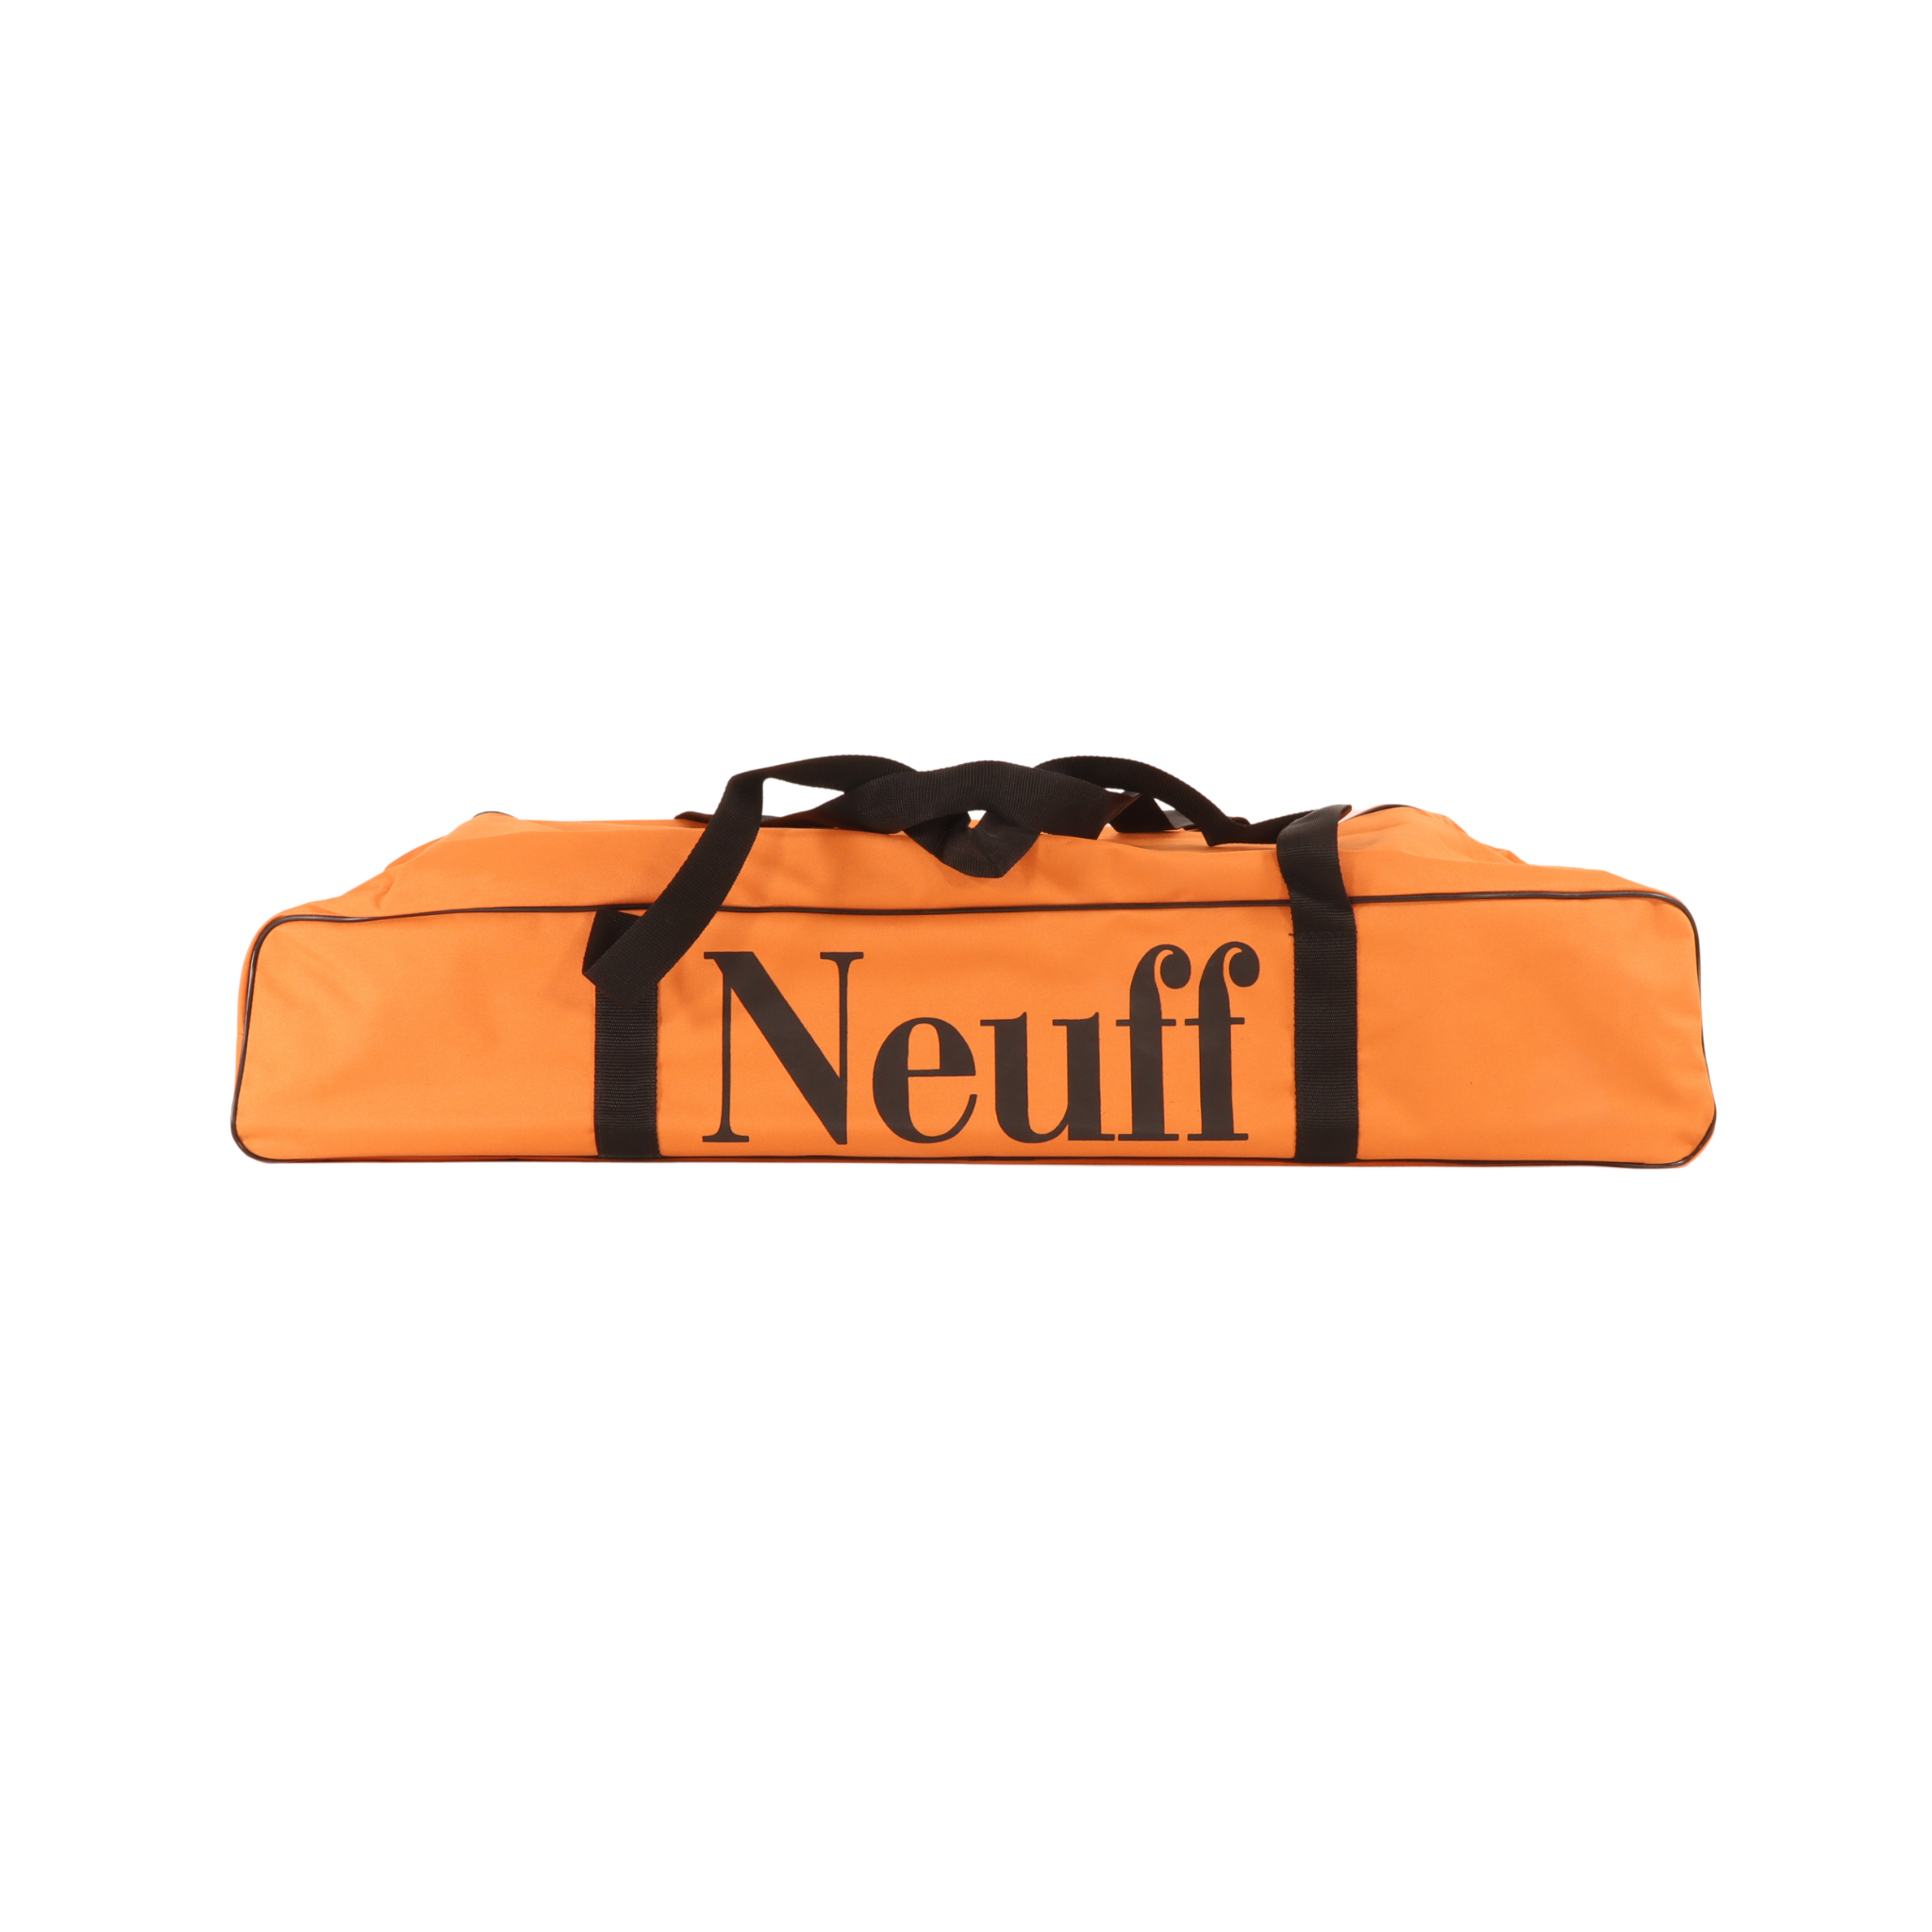 Neuff Starting Block Bag for sprint blocks | Orange bag with Black Neuff Branding